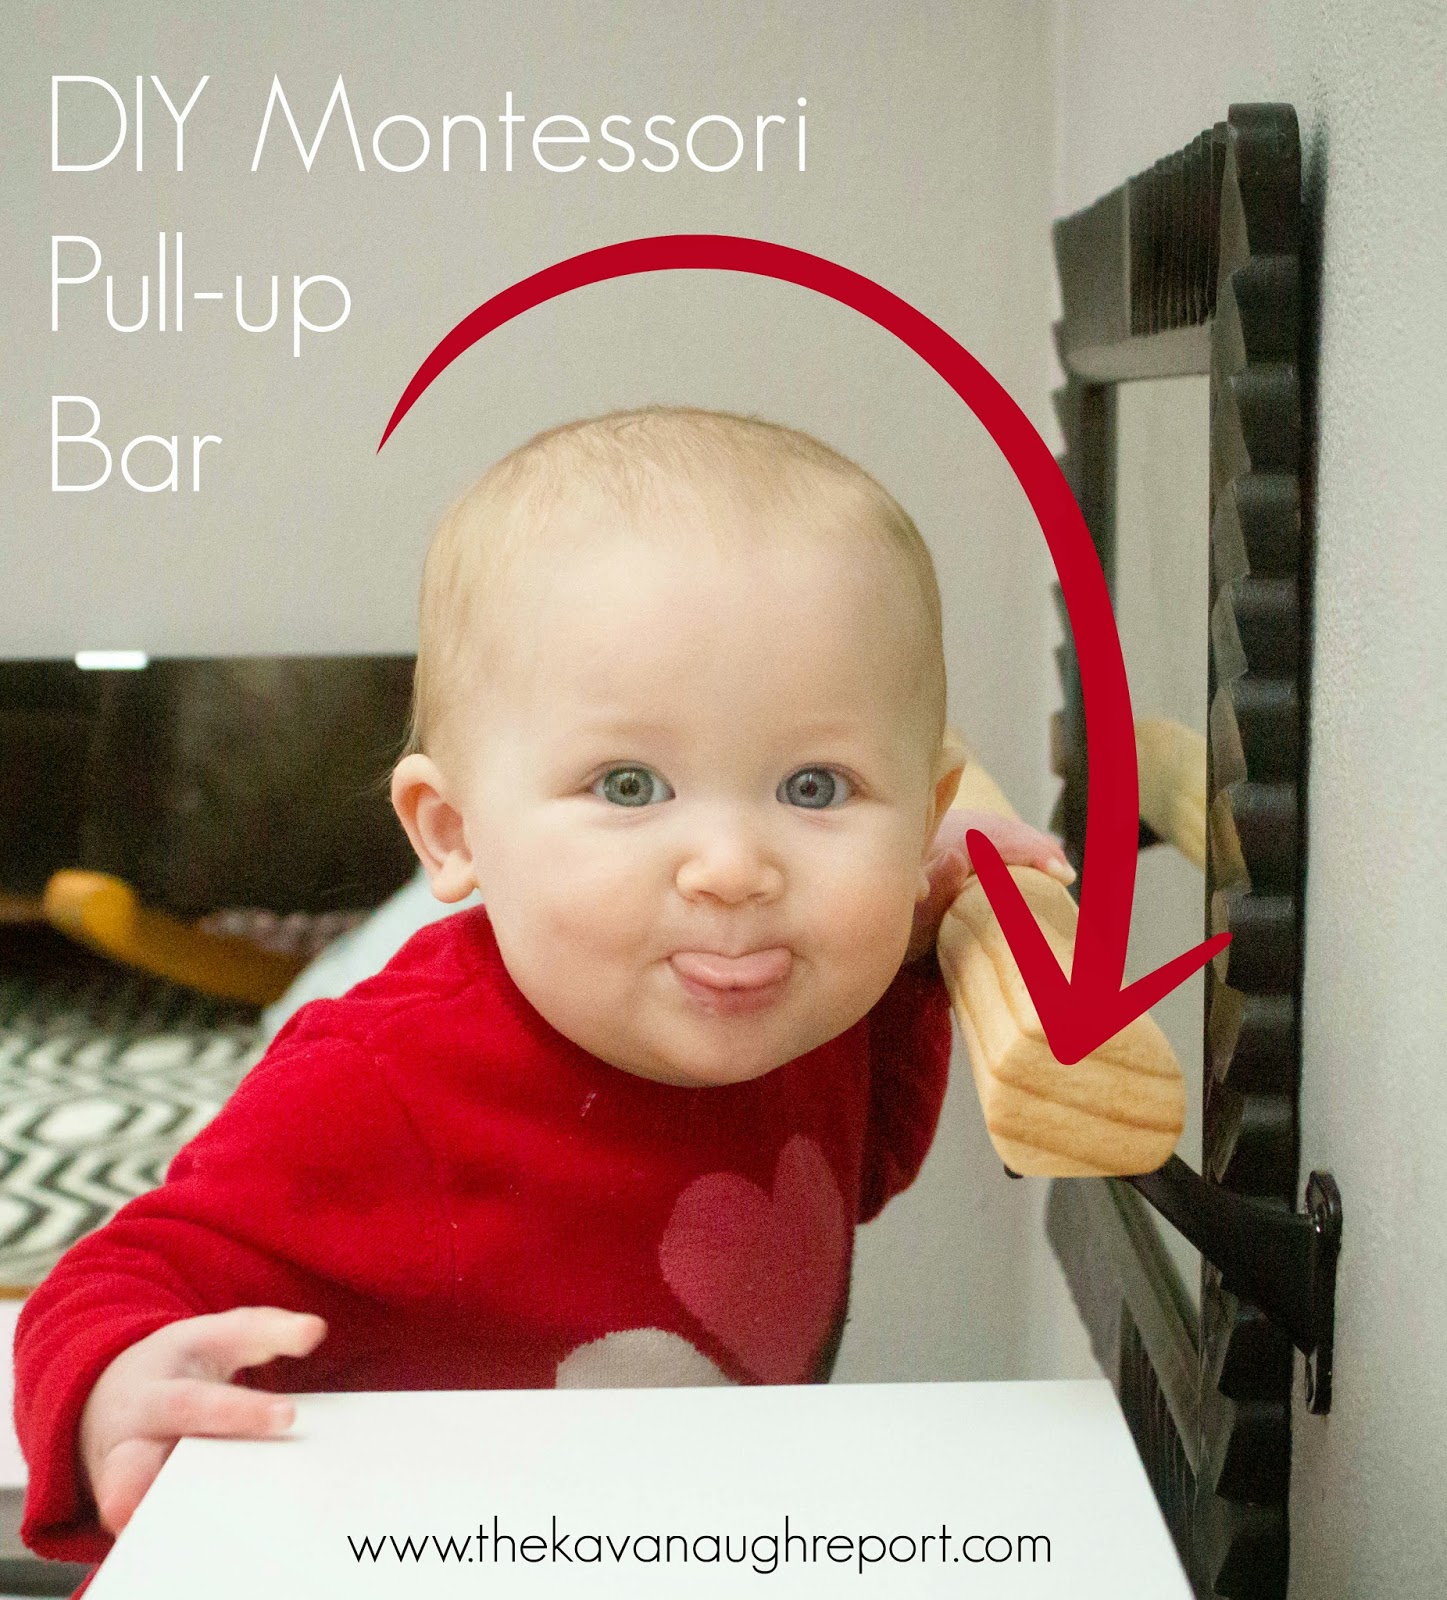 Diy Montessori Pull-Up Bar